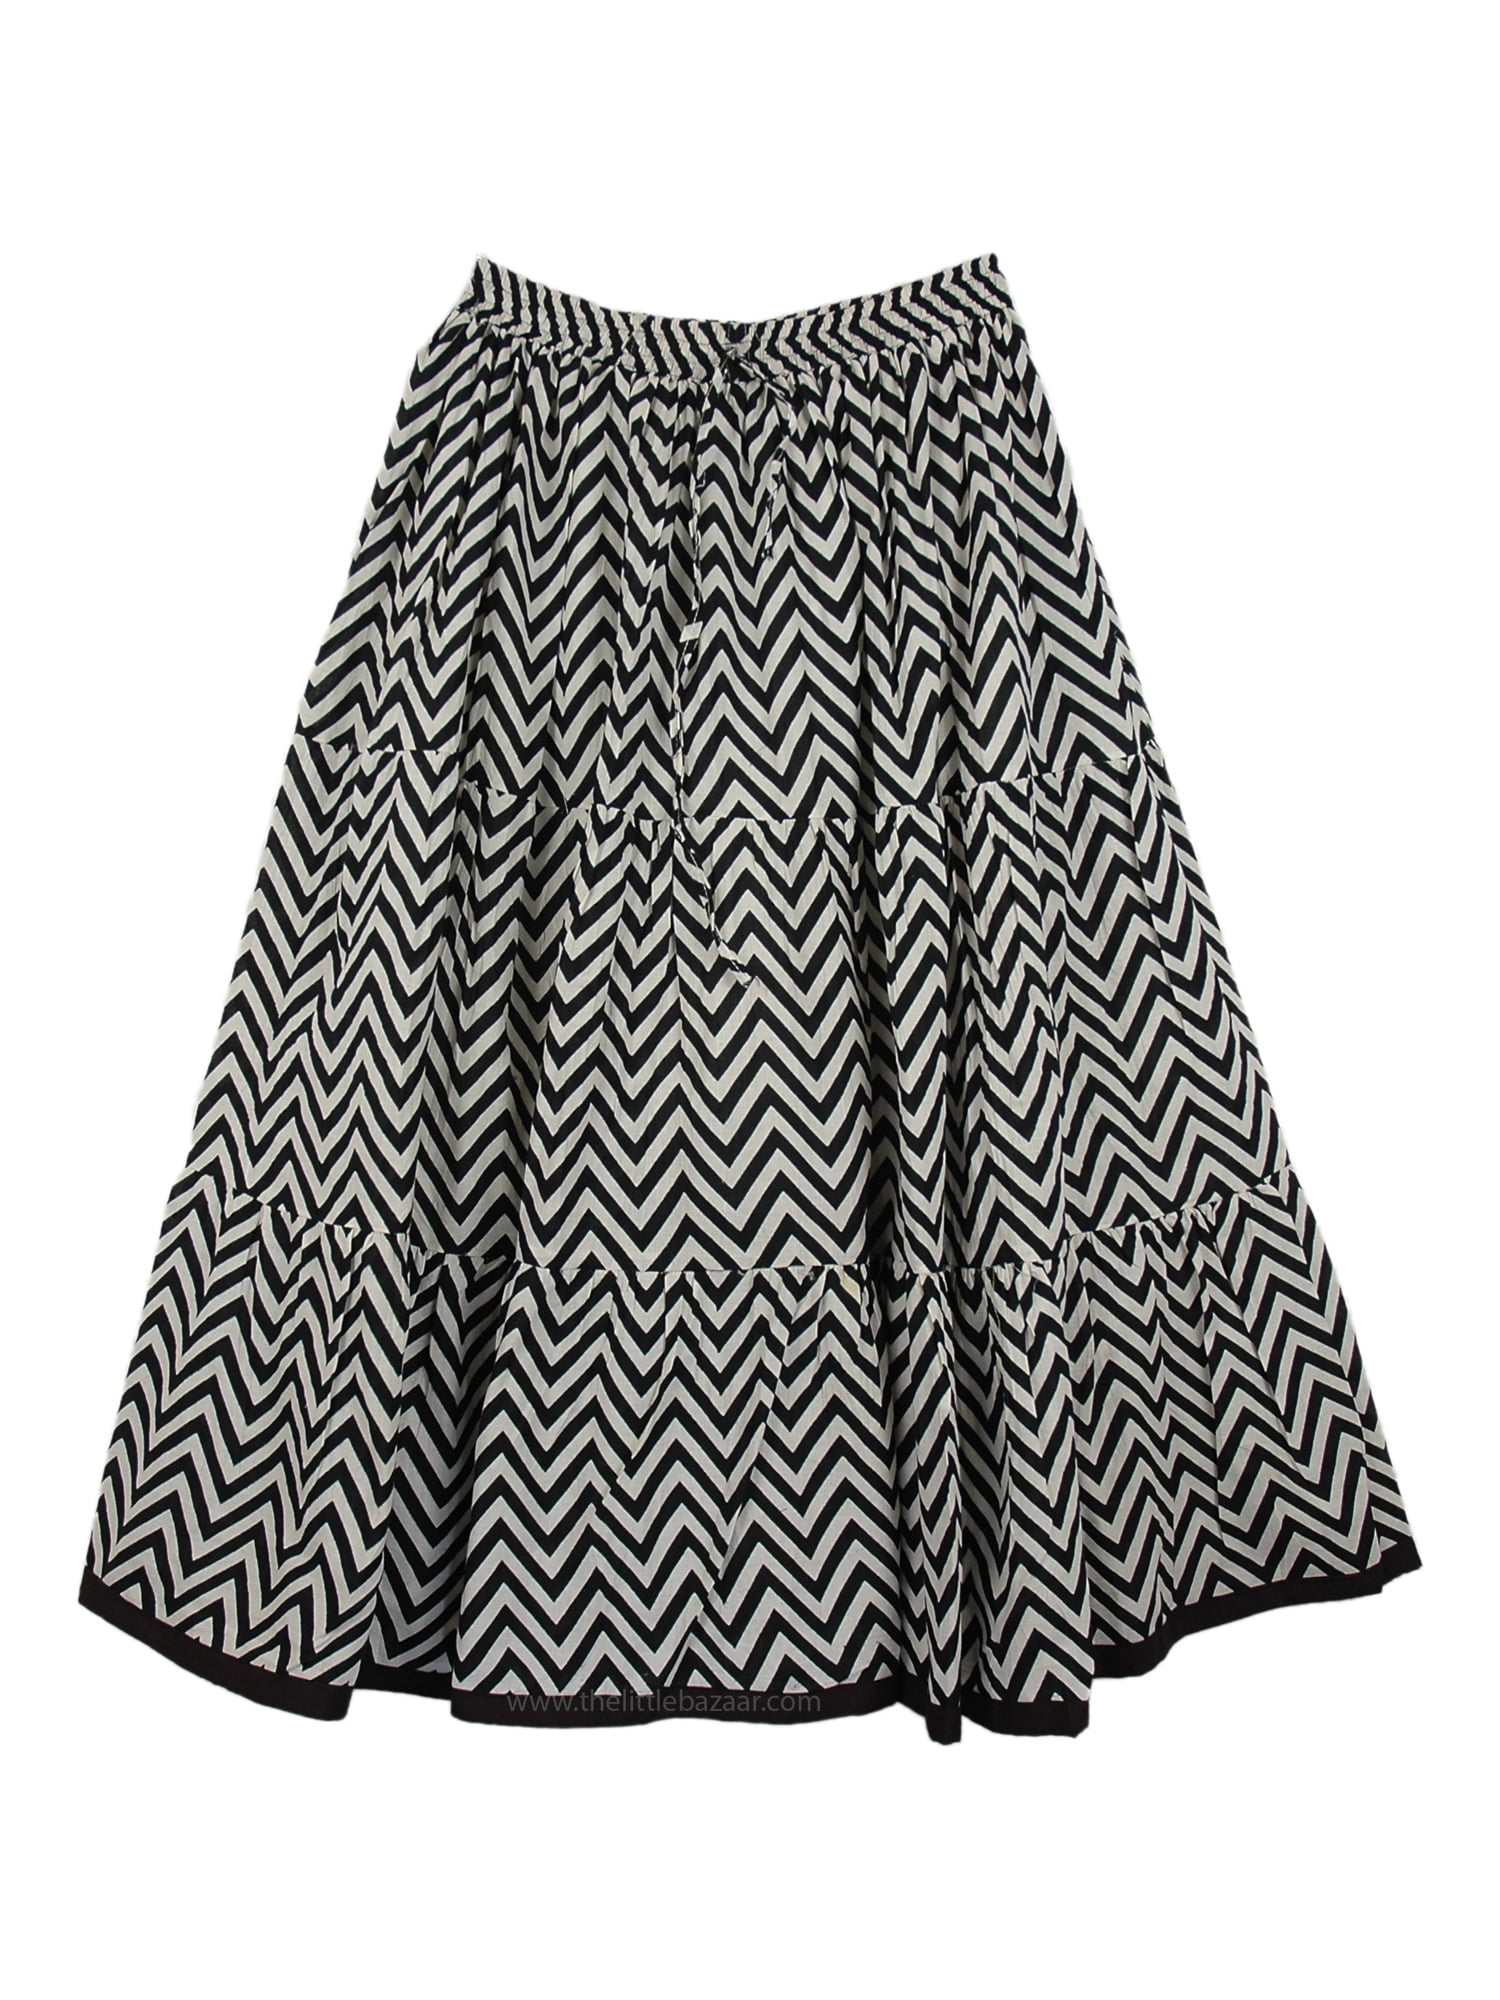 Short Black White Skirt in Printed Cotton - Walmart.com